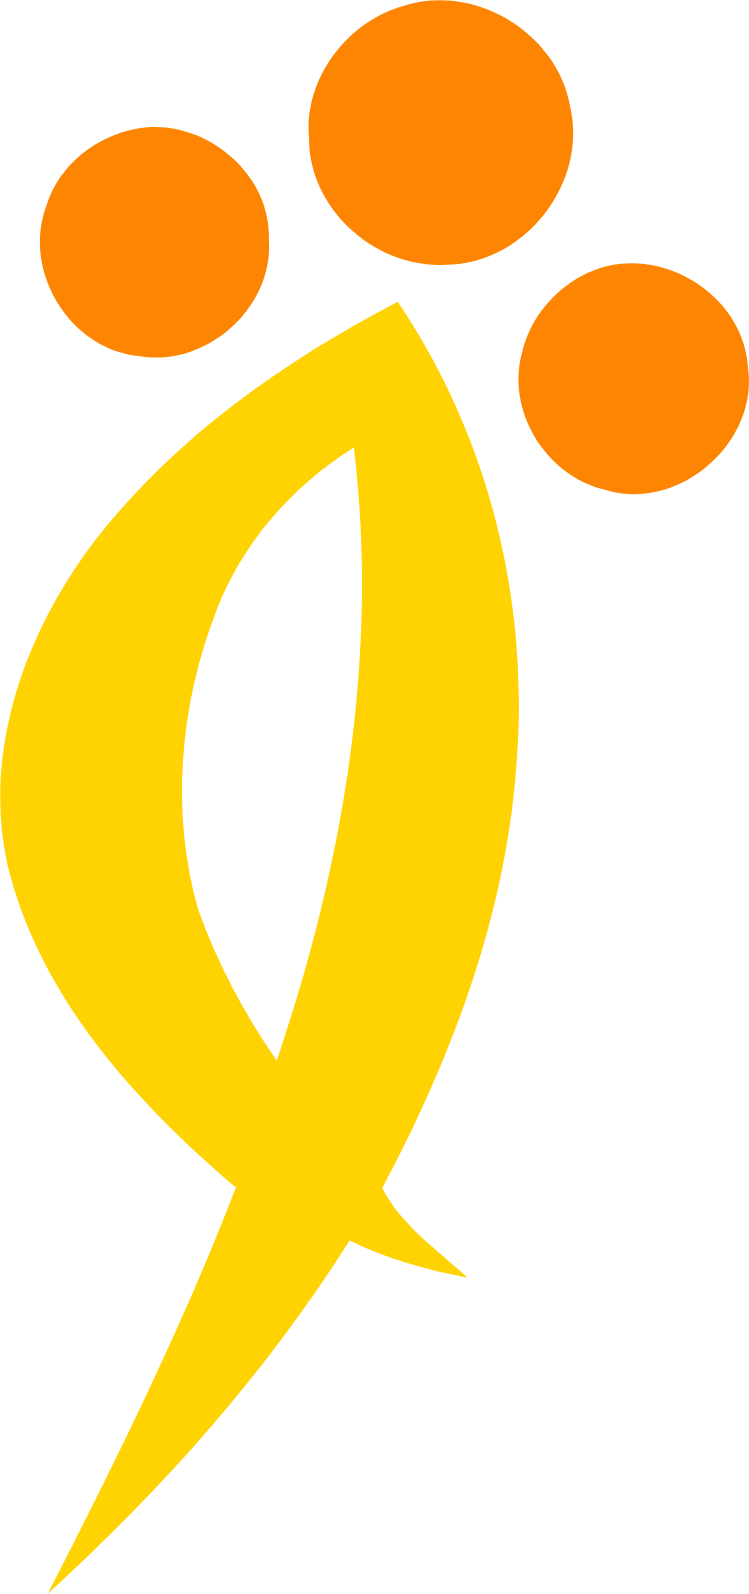 The9 logo (transparent PNG)